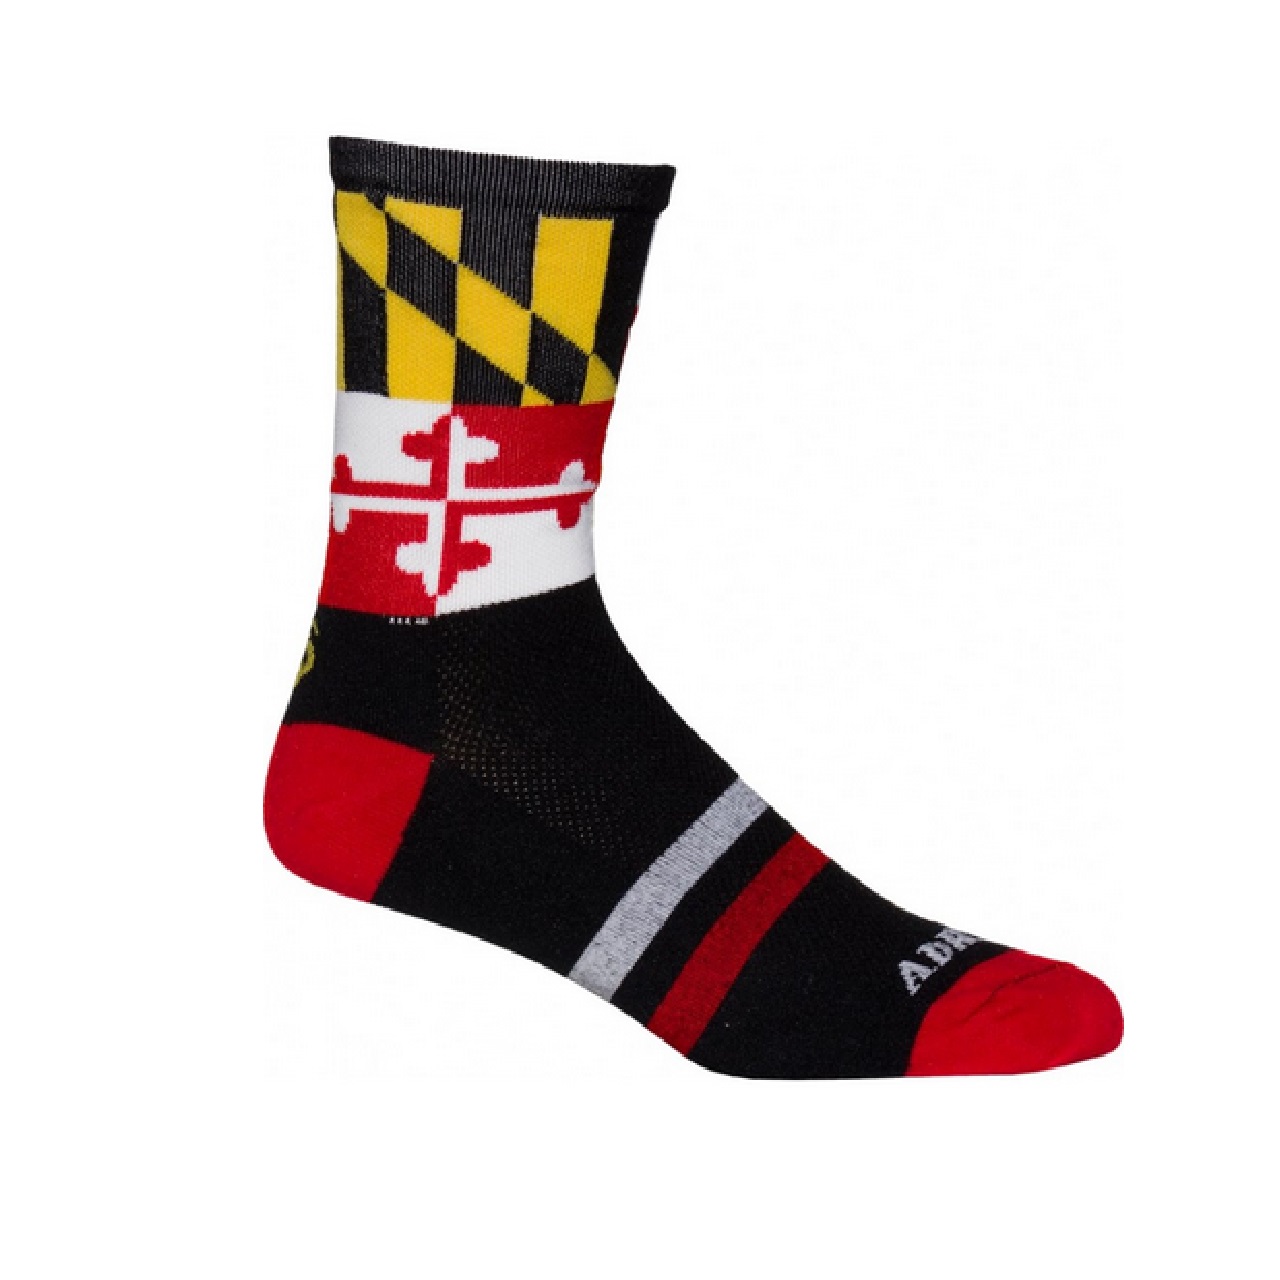 University of Maryland Terrapins crew length-5" Multi Purpose Cycling  Socks